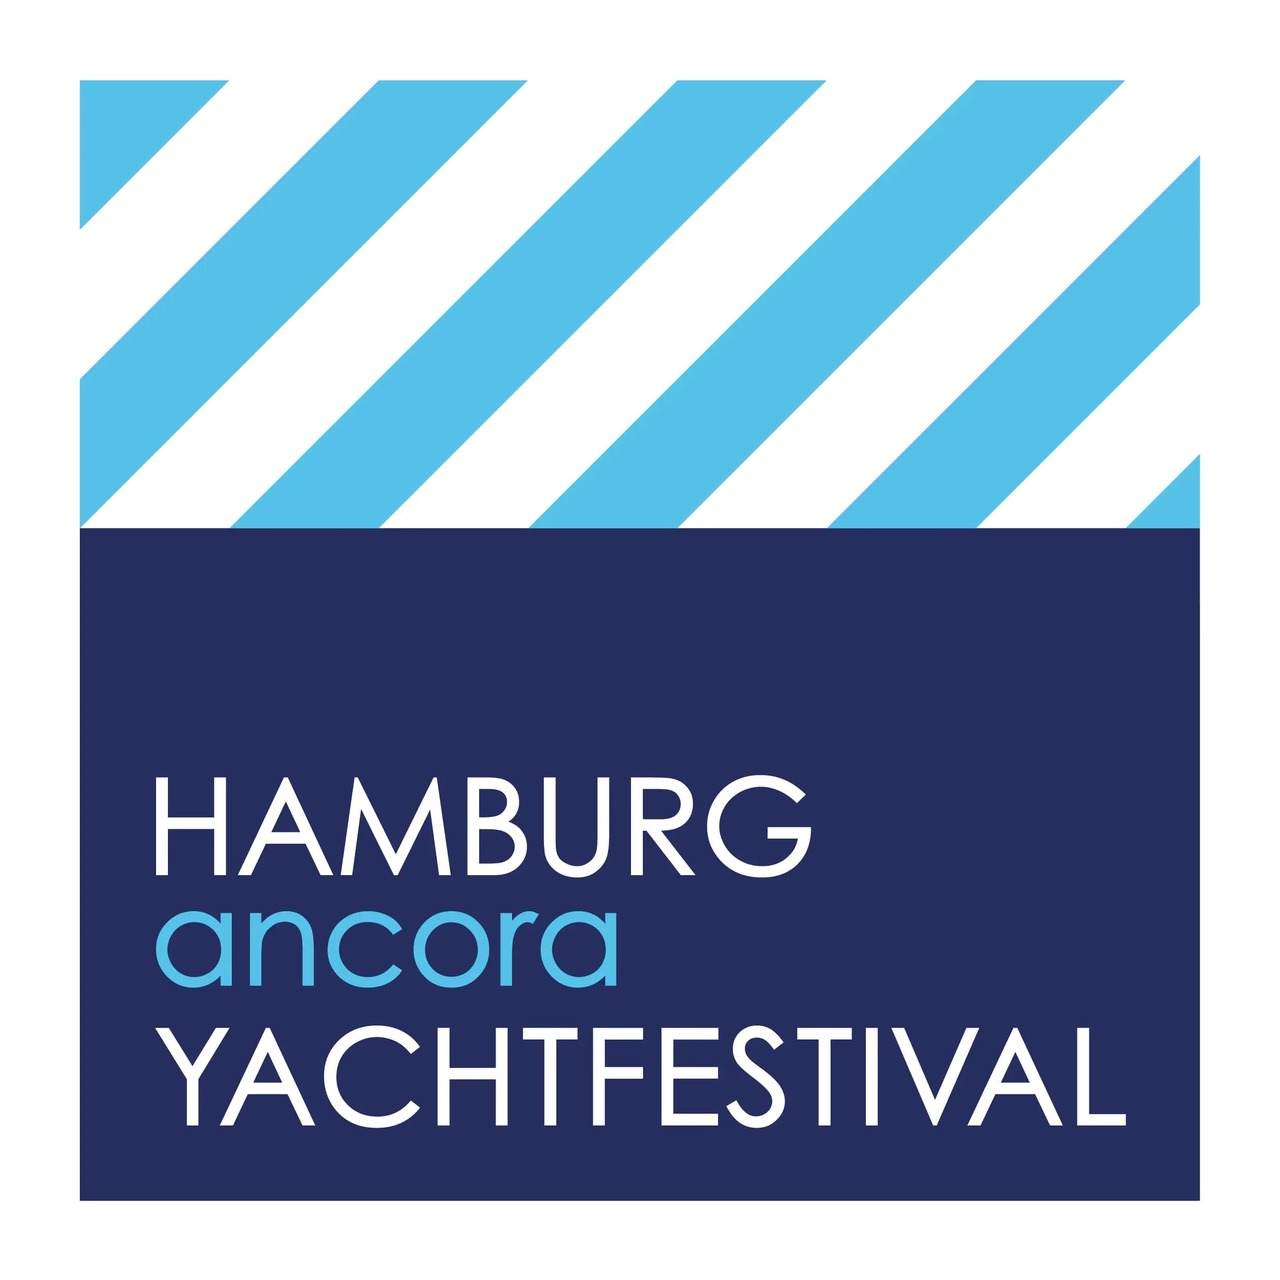 HAMBURG Ancora YACHTFESTIVAL | Alemania